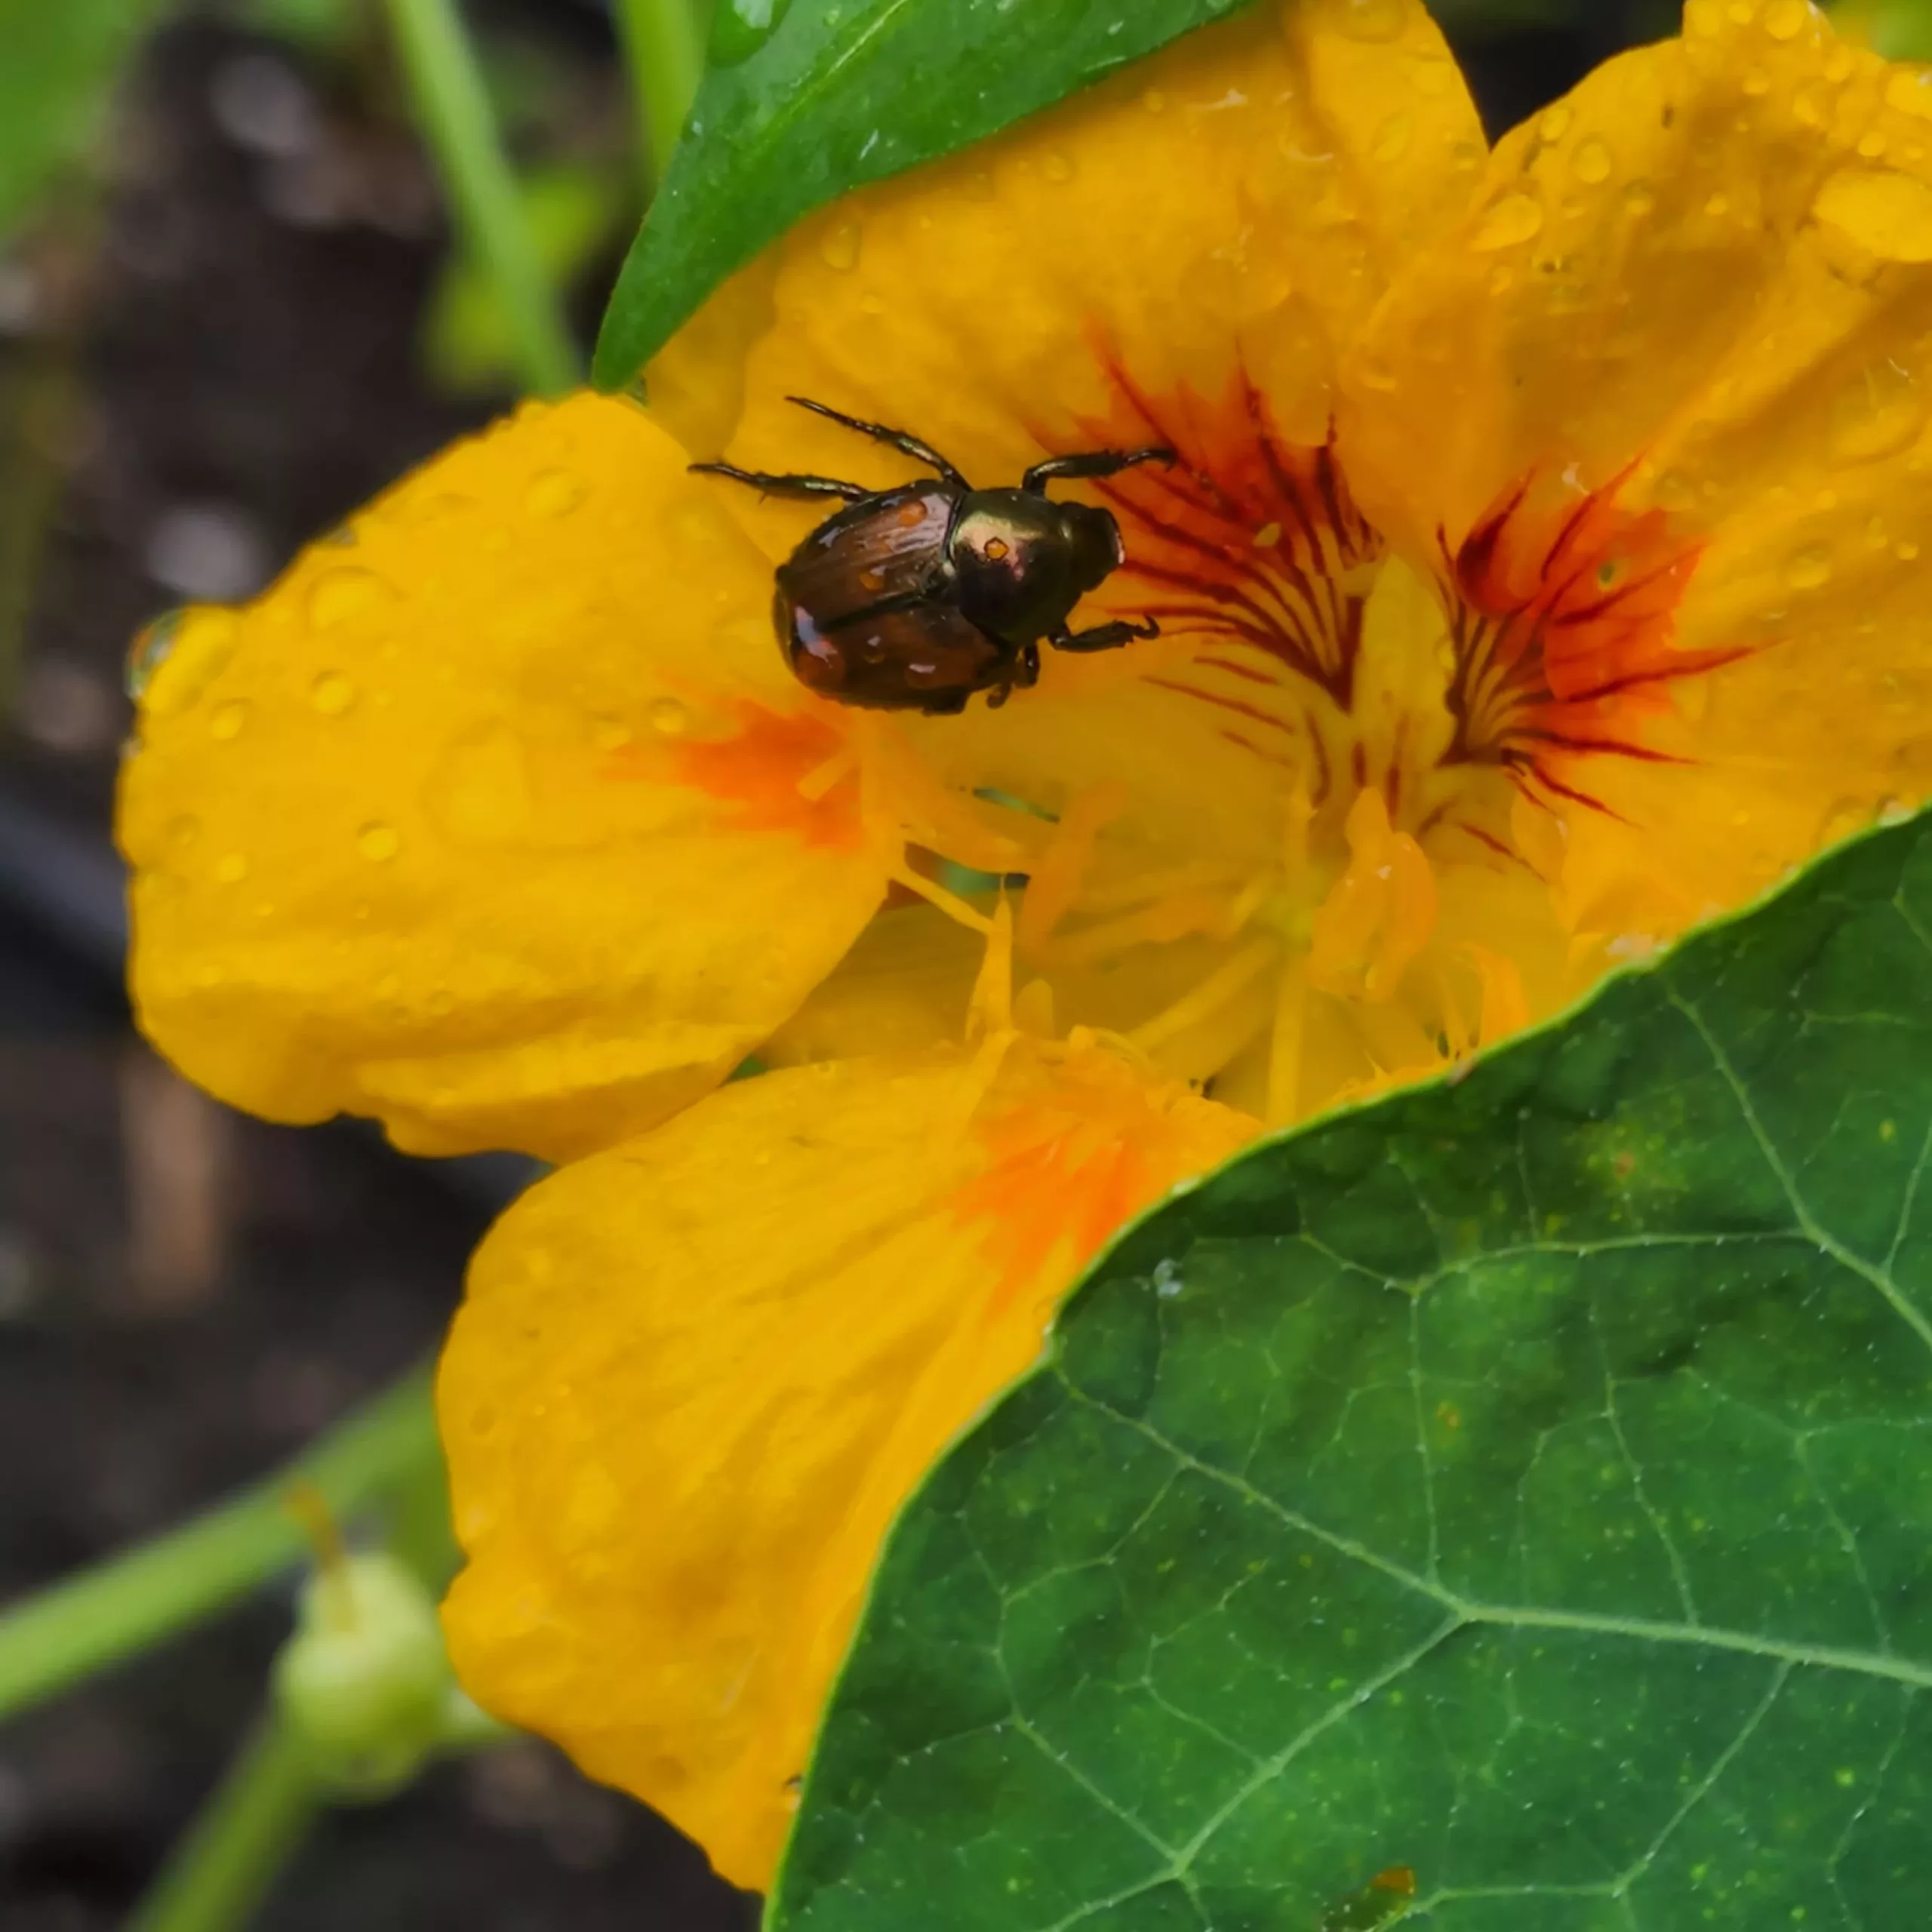 Japanese beetle on a yellow nasturtium flower